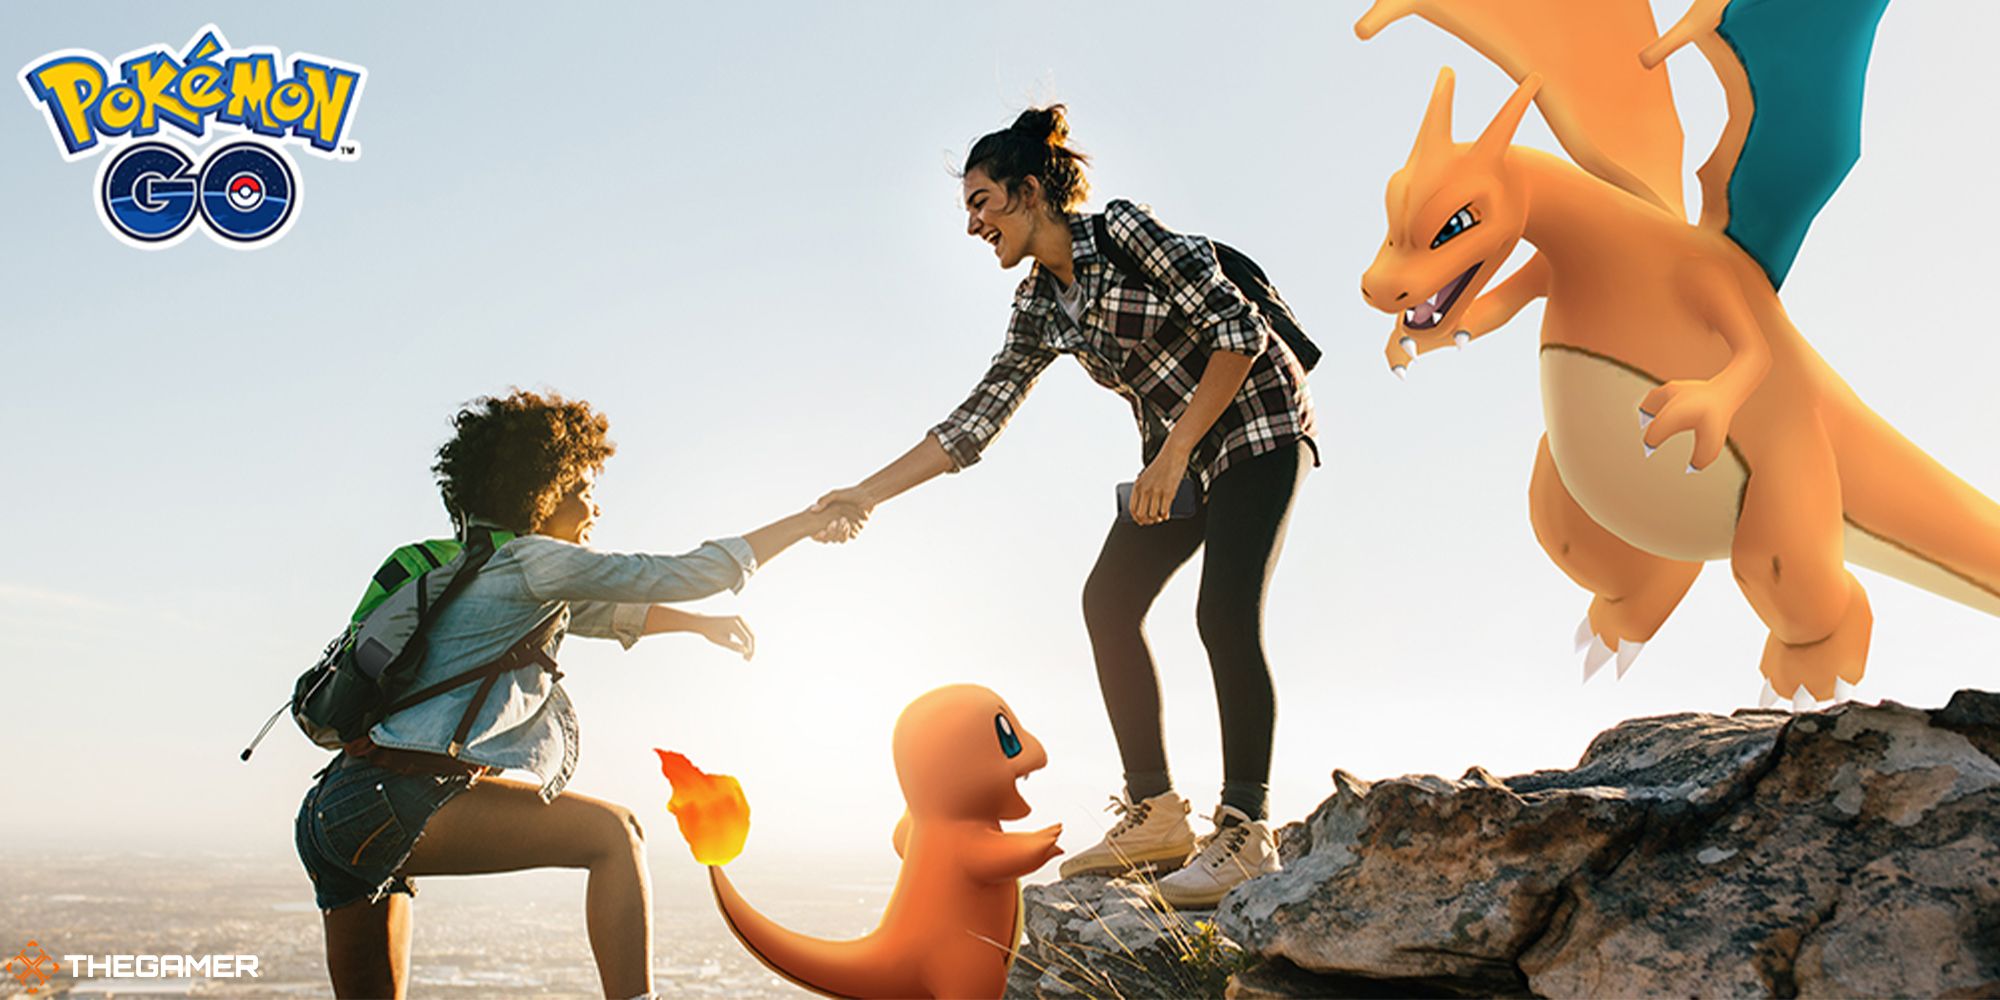 Pokemon Go - promo image of two players and pokemon